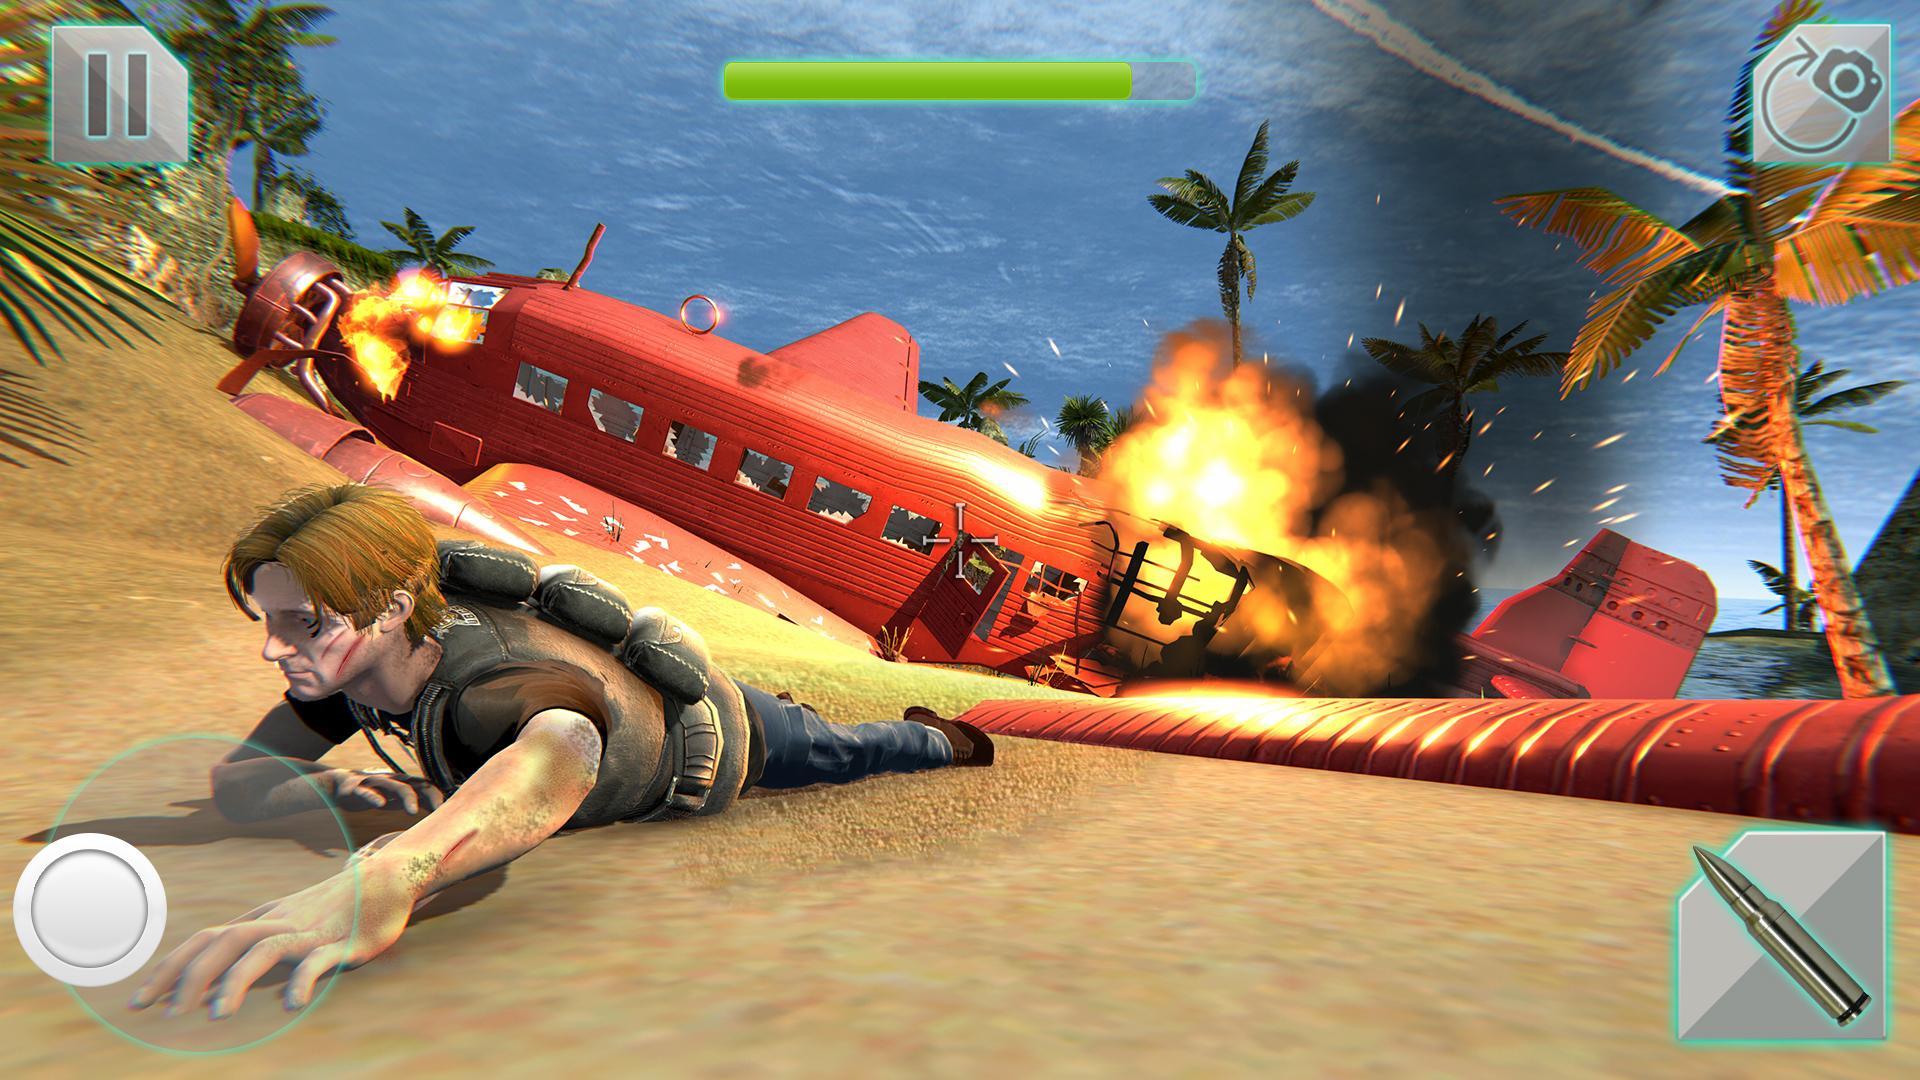 Screenshot 1 of Survival Island - หนีป่า 1.1.5